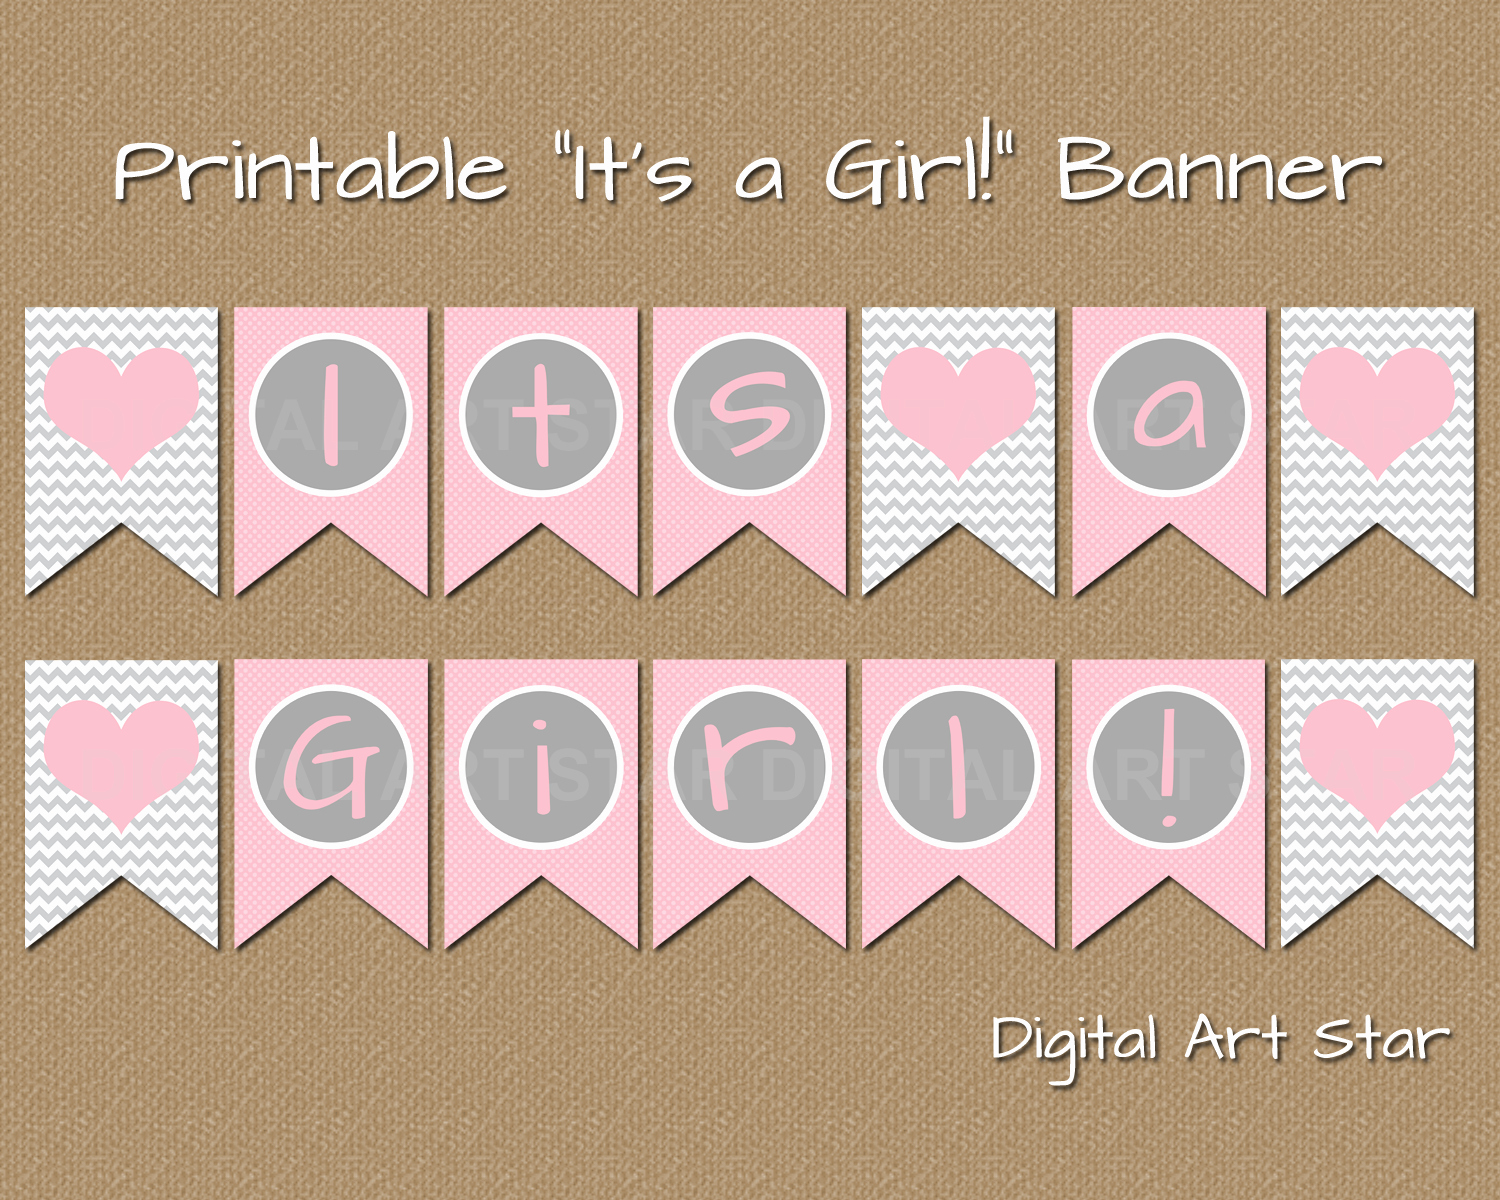 Diy Baby Shower Banner Template Beautiful Digital Art Star Printable Party Decor Diy Printable It